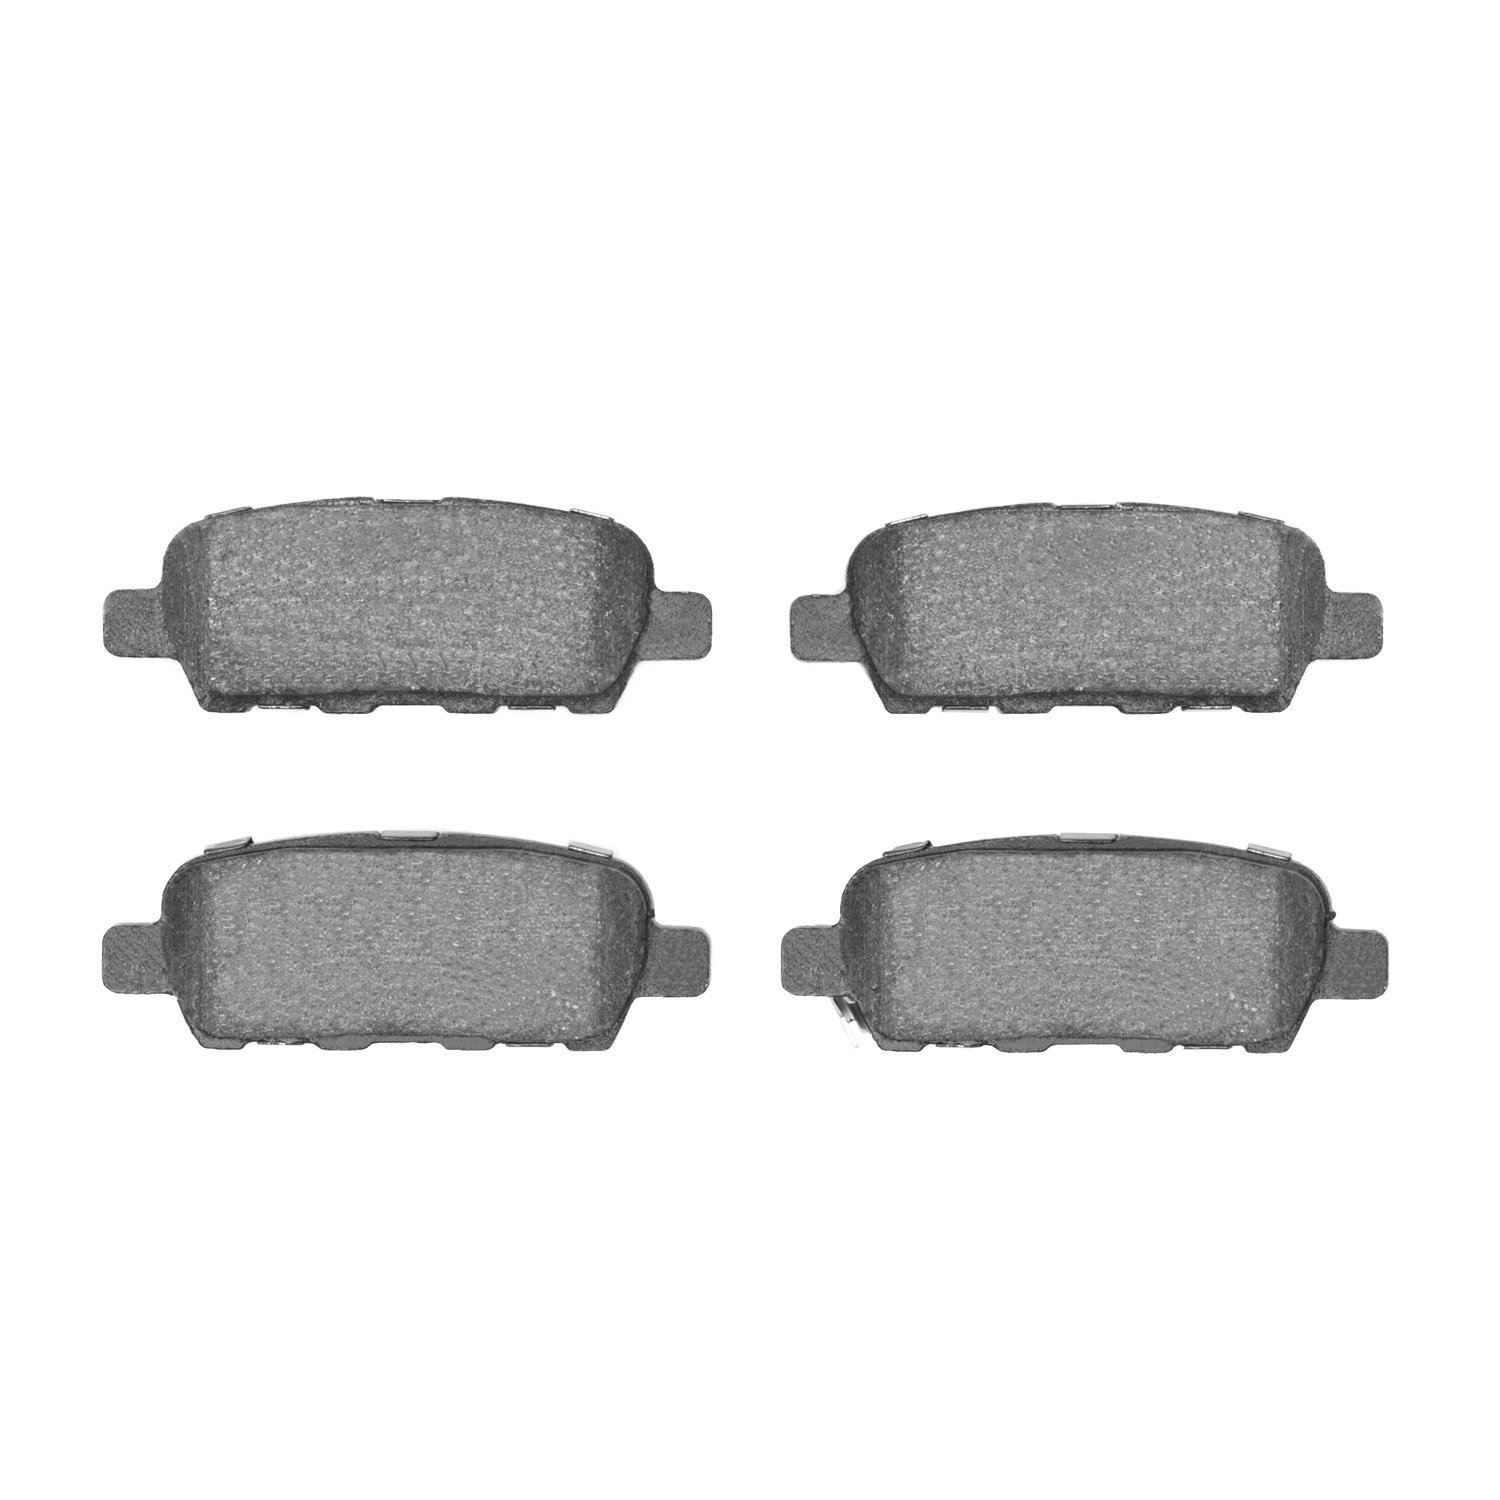 1310-0905-00 3000-Series Ceramic Brake Pads, Fits Select Multiple Makes/Models, Position: Rear